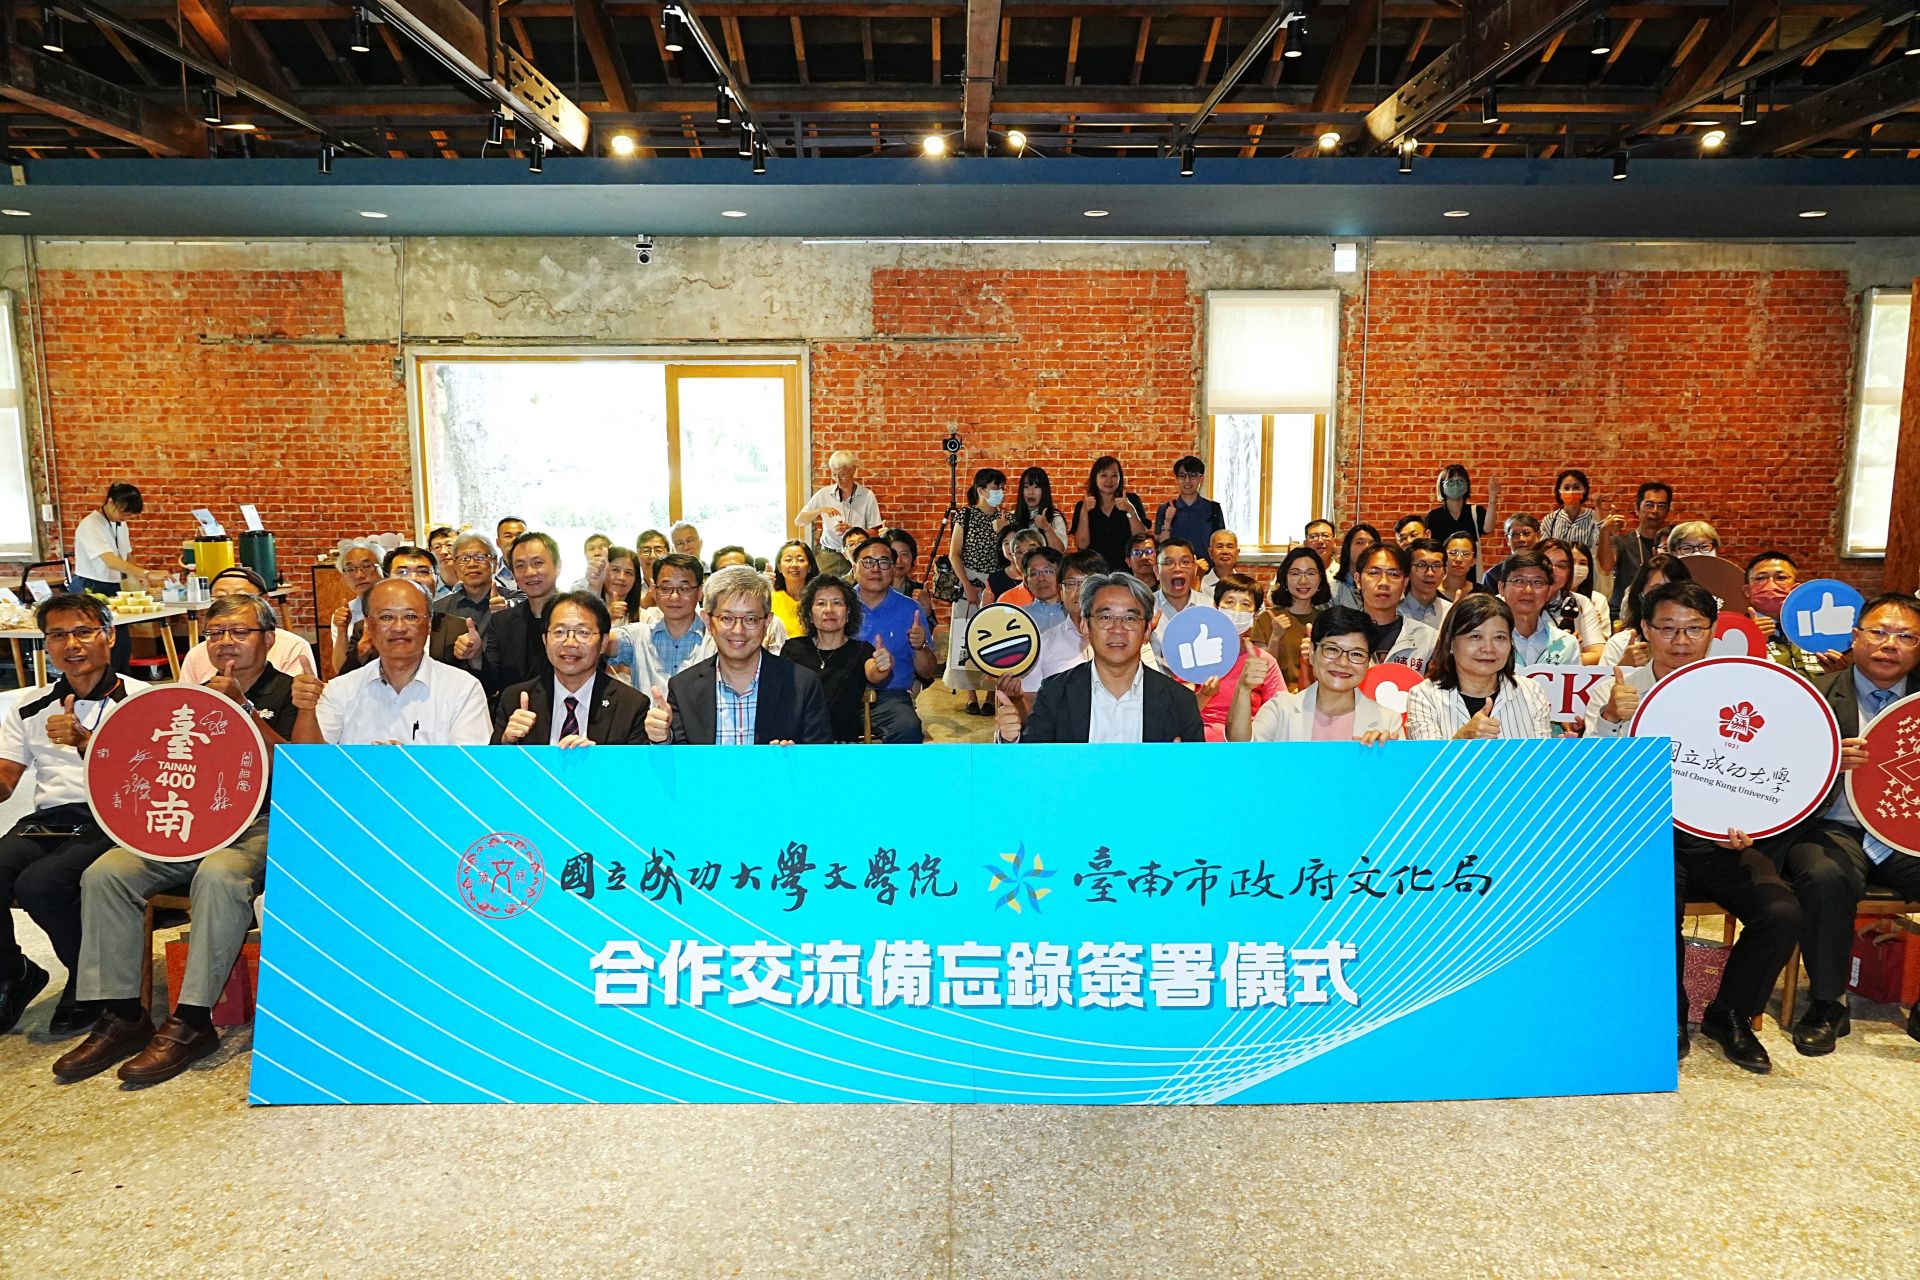 Cultural Affairs Bureau and NCKU join forces, sign memorandum to boost cultural education cooperation.